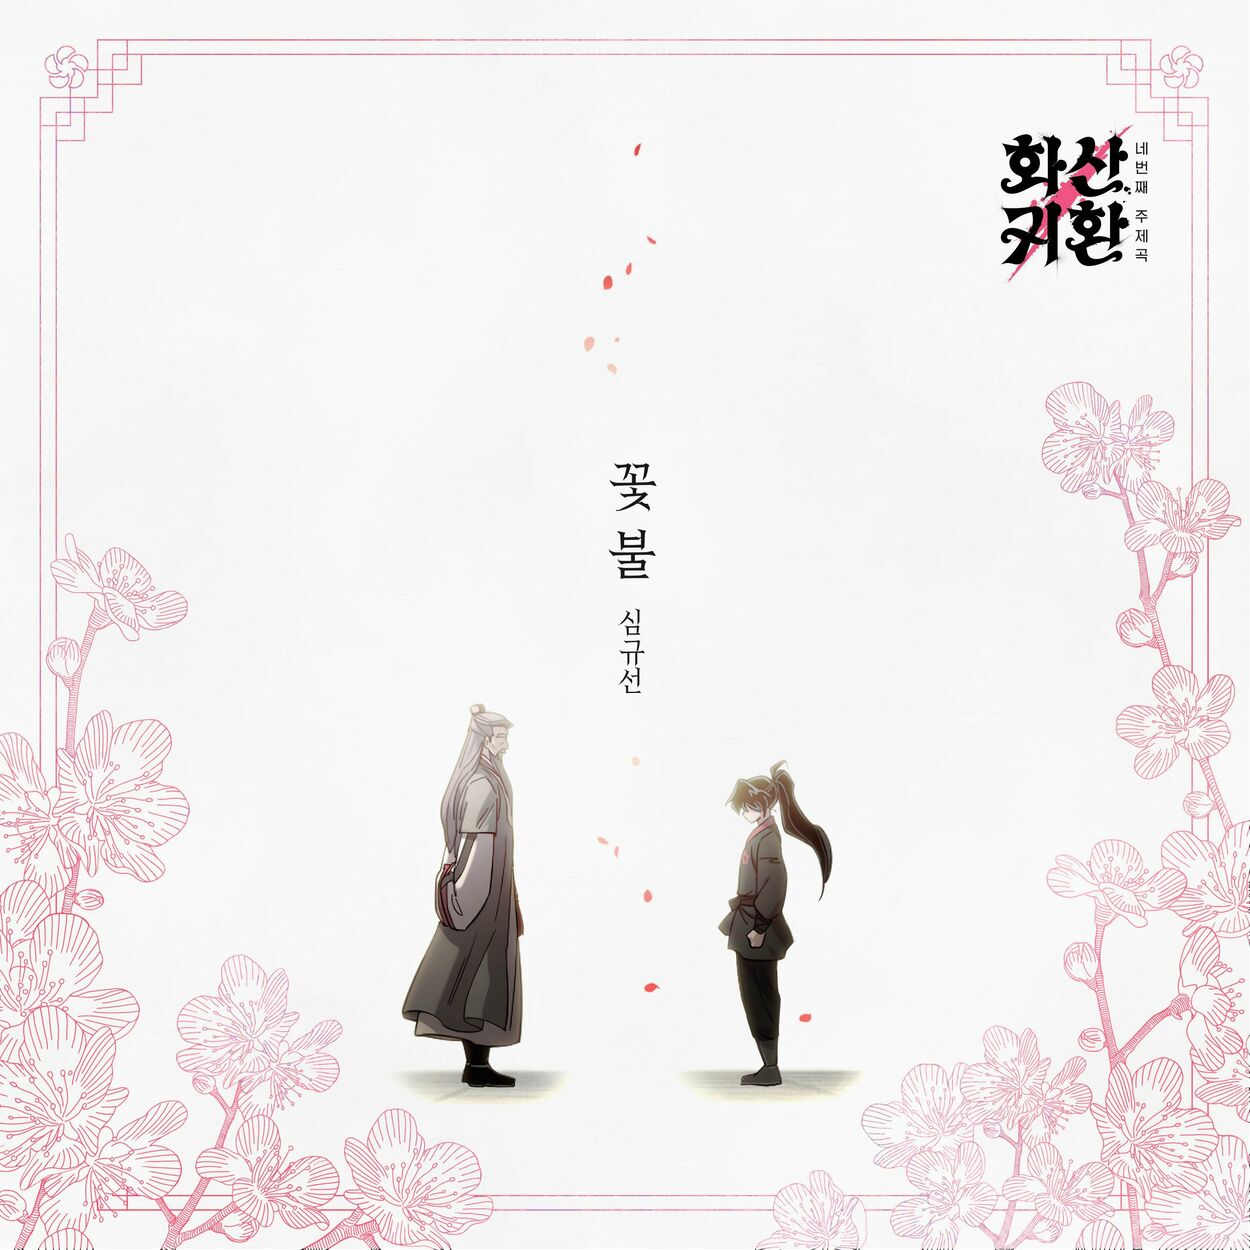 Lucia – Webtoon ‘Return of the Blossoming Blade’ Part.4 OST